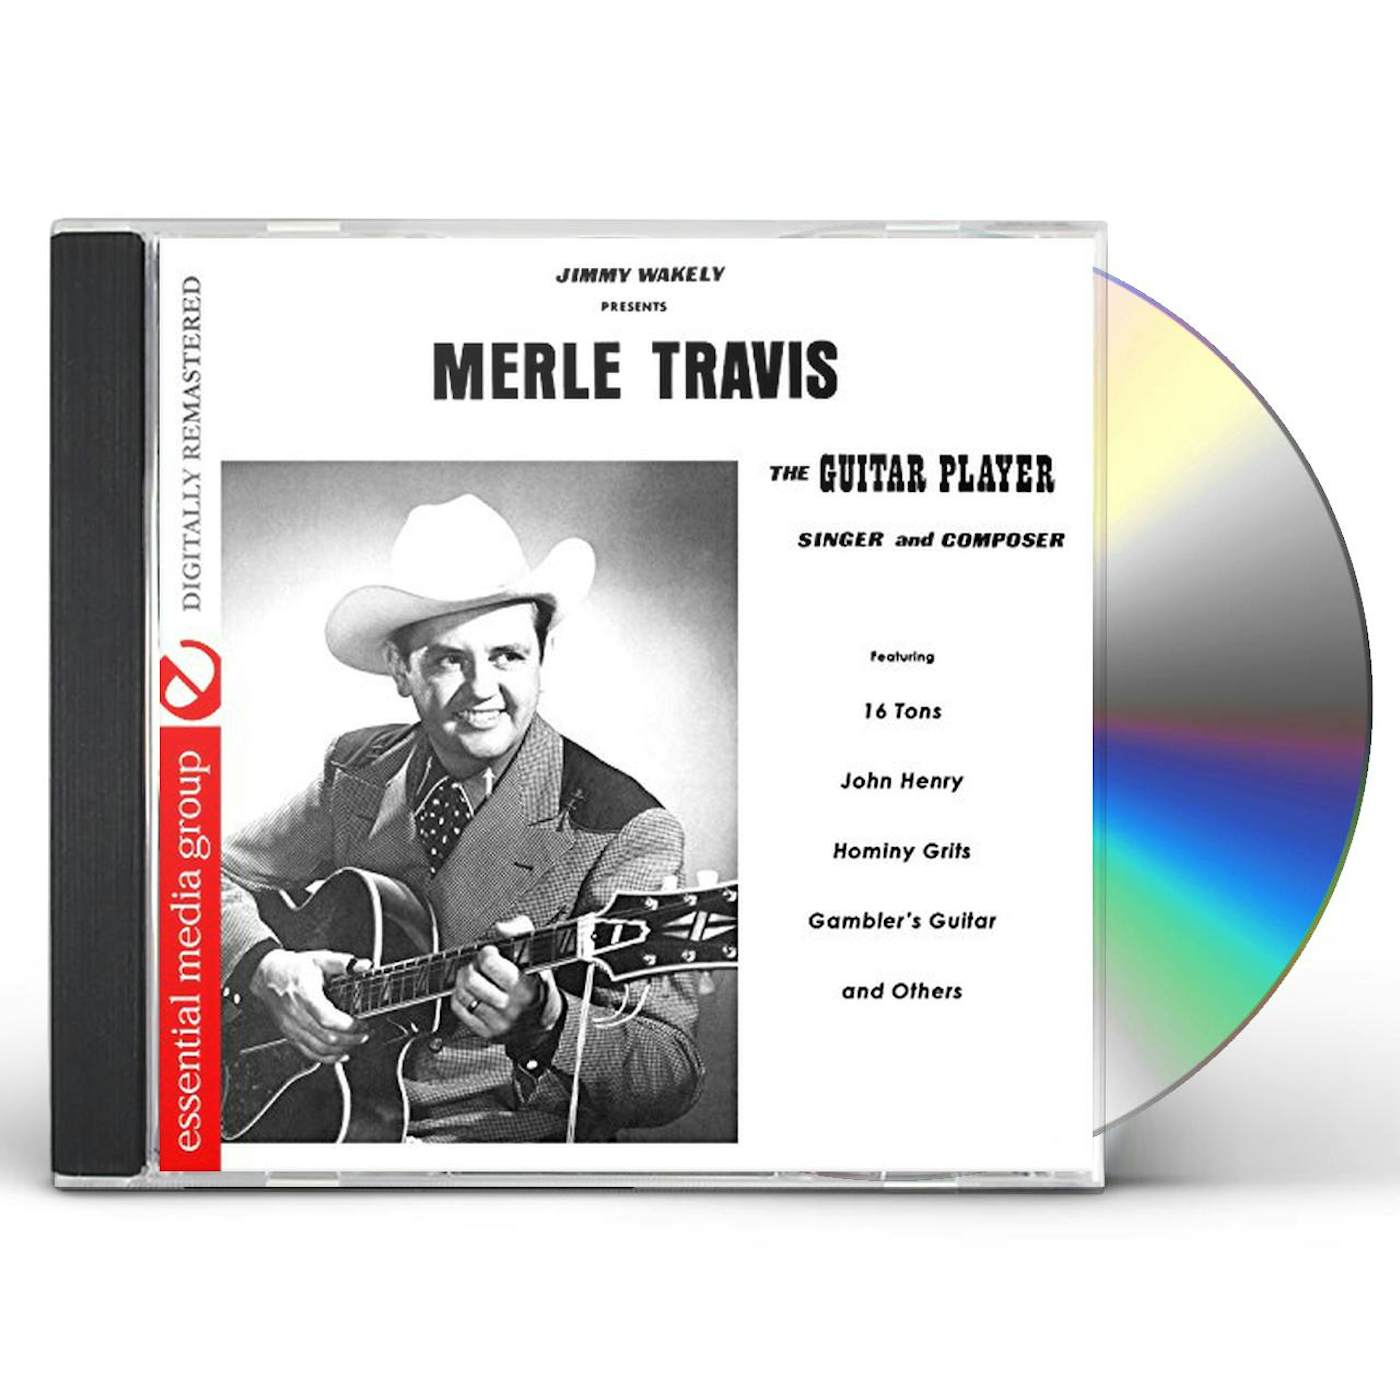 Merle Travis GUITAR PLAYER SINGER & COMPOSER CD